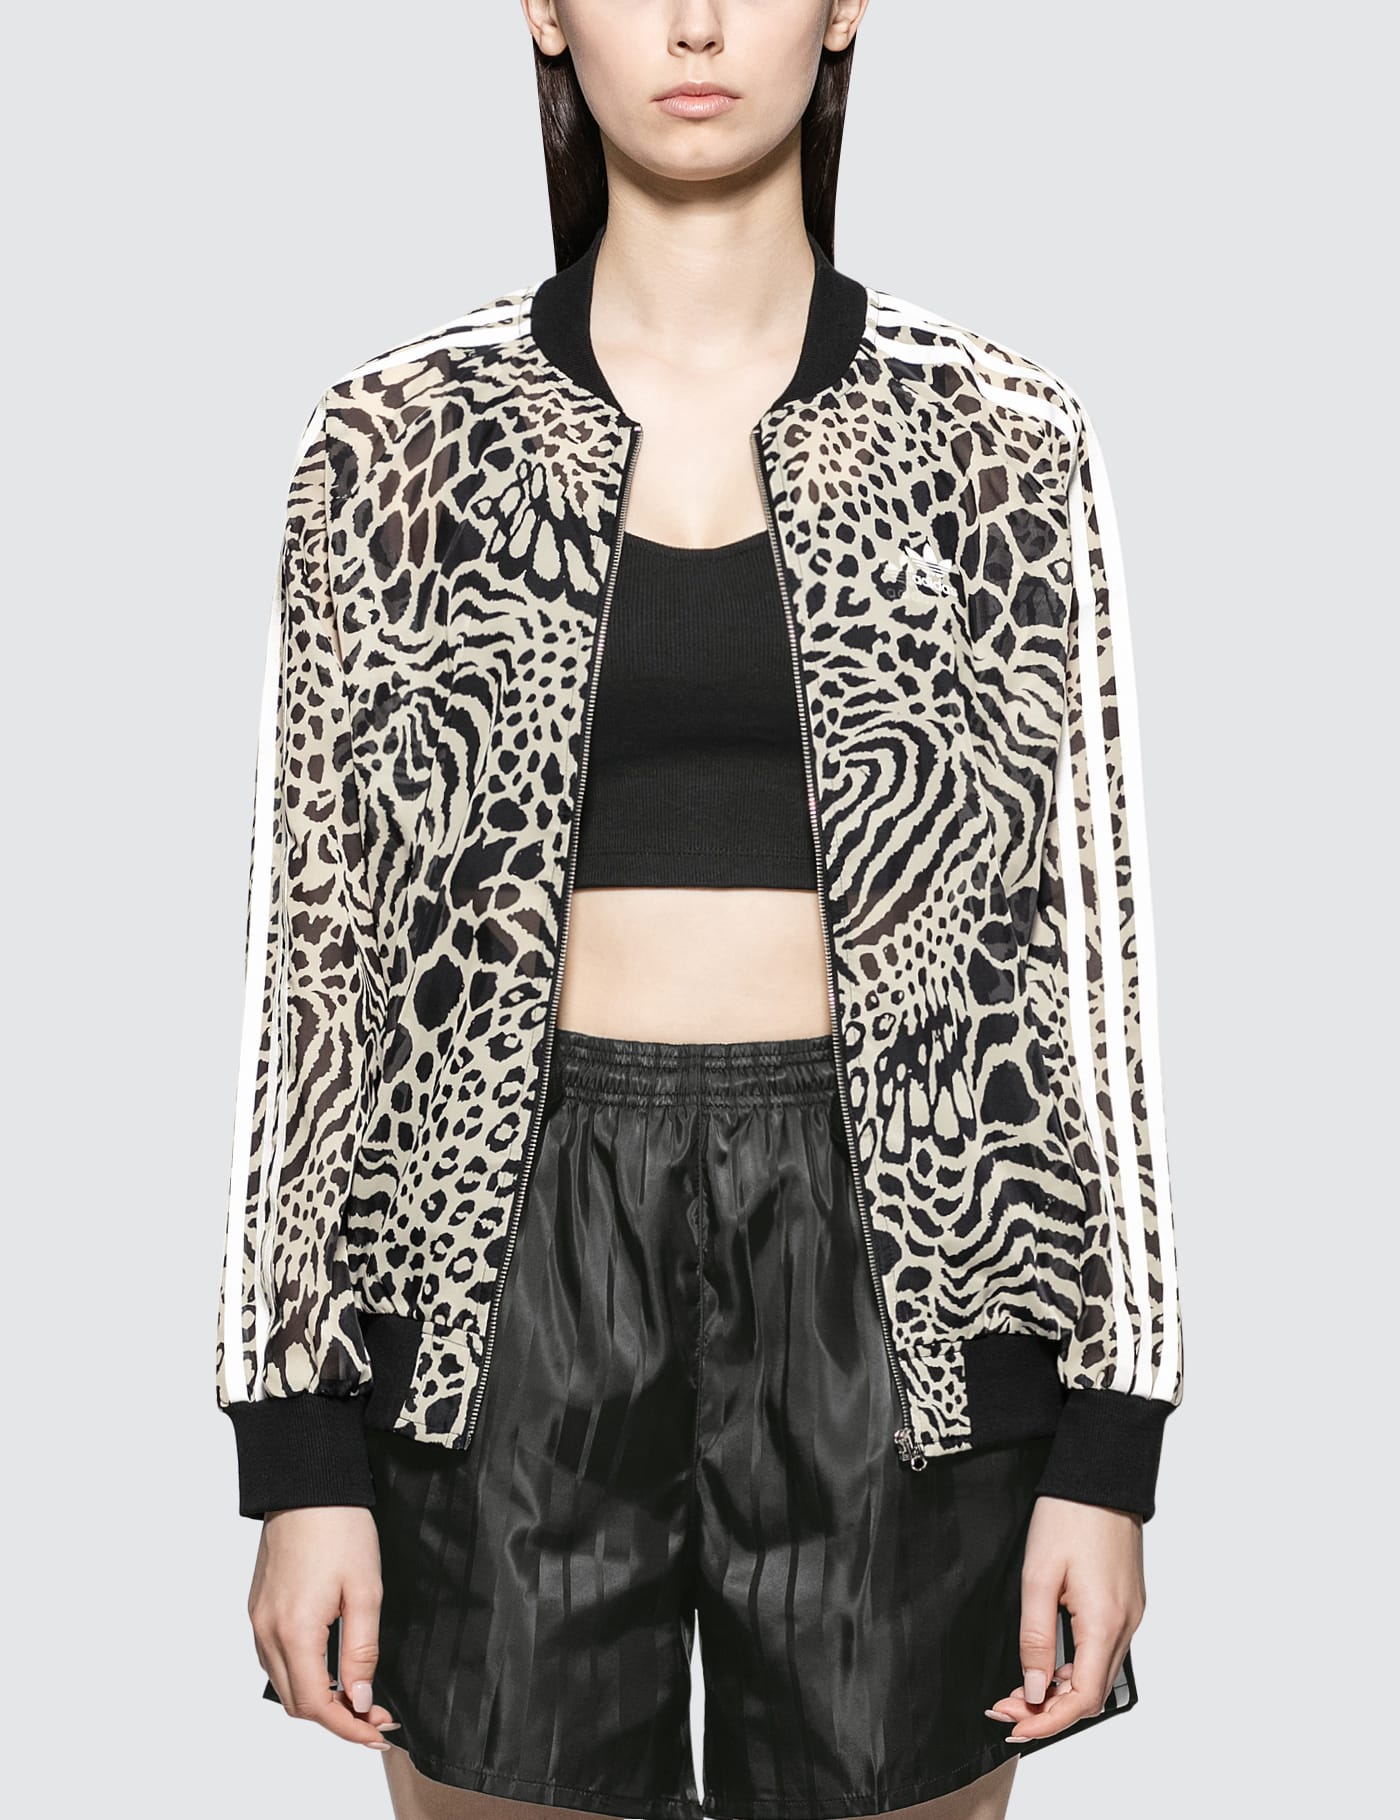 adidas zebra print jacket